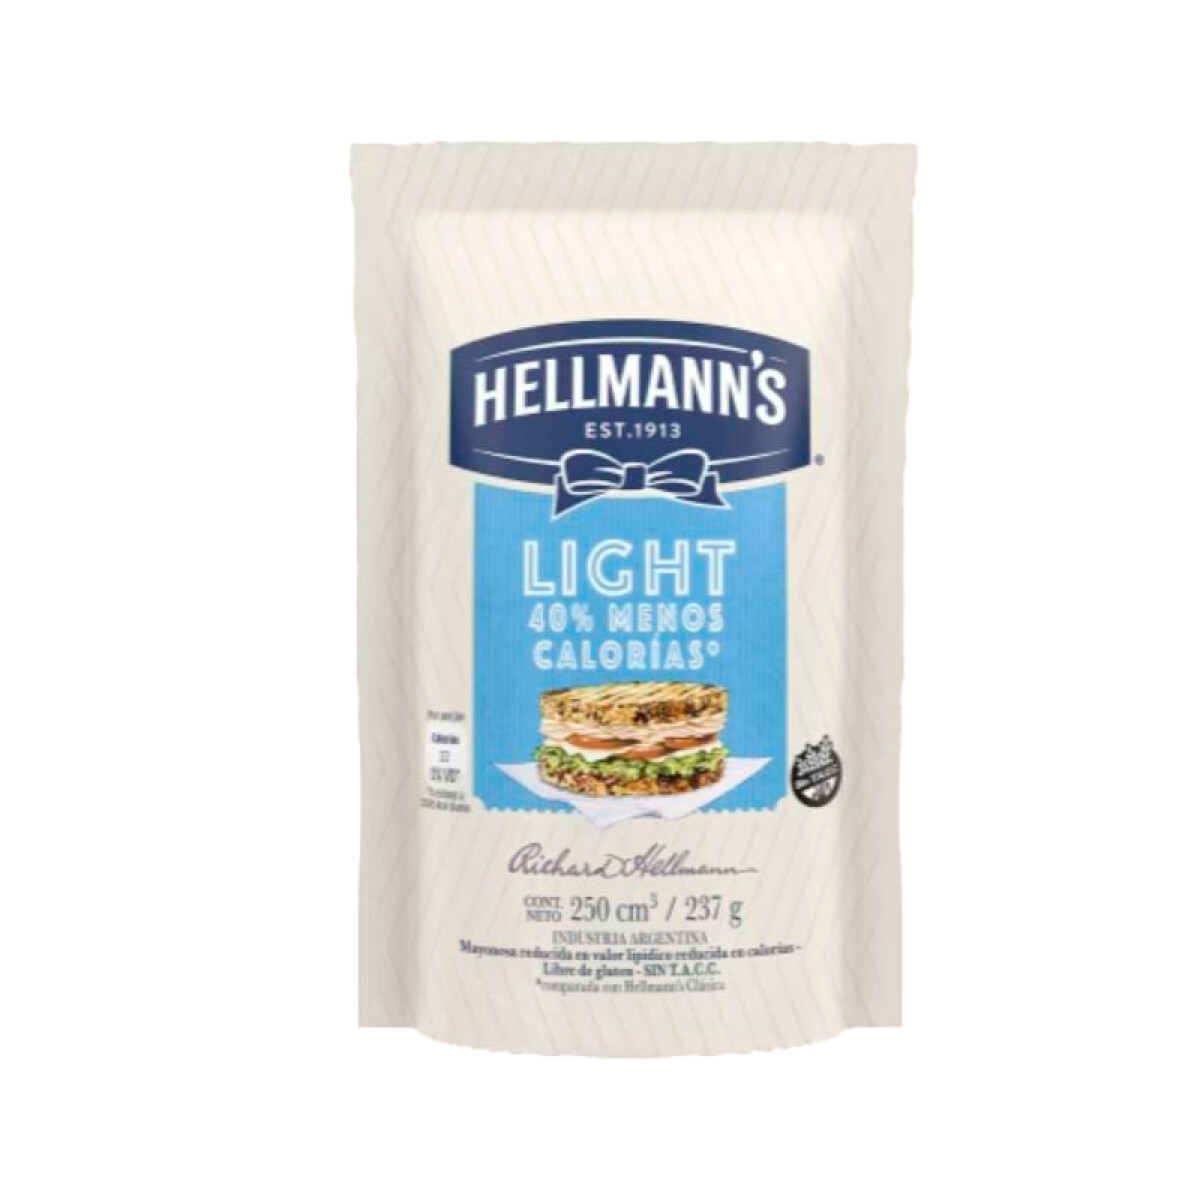 Mayonesa Hellmann's Light - 250 cm3 